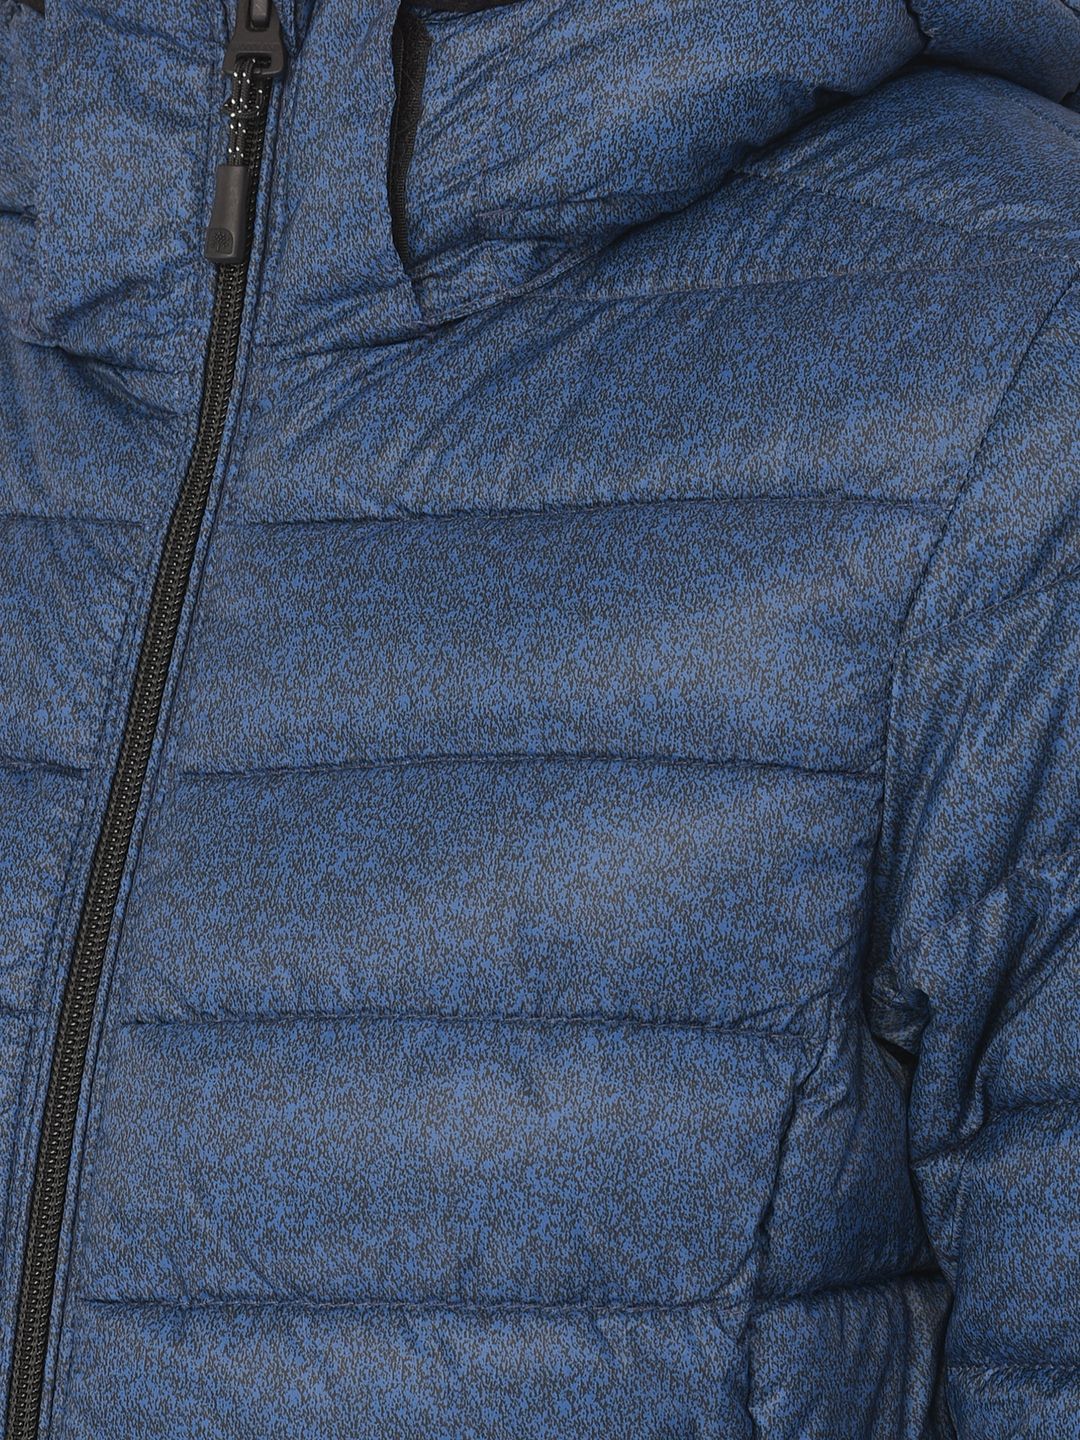 Blue/Black quilted jacket